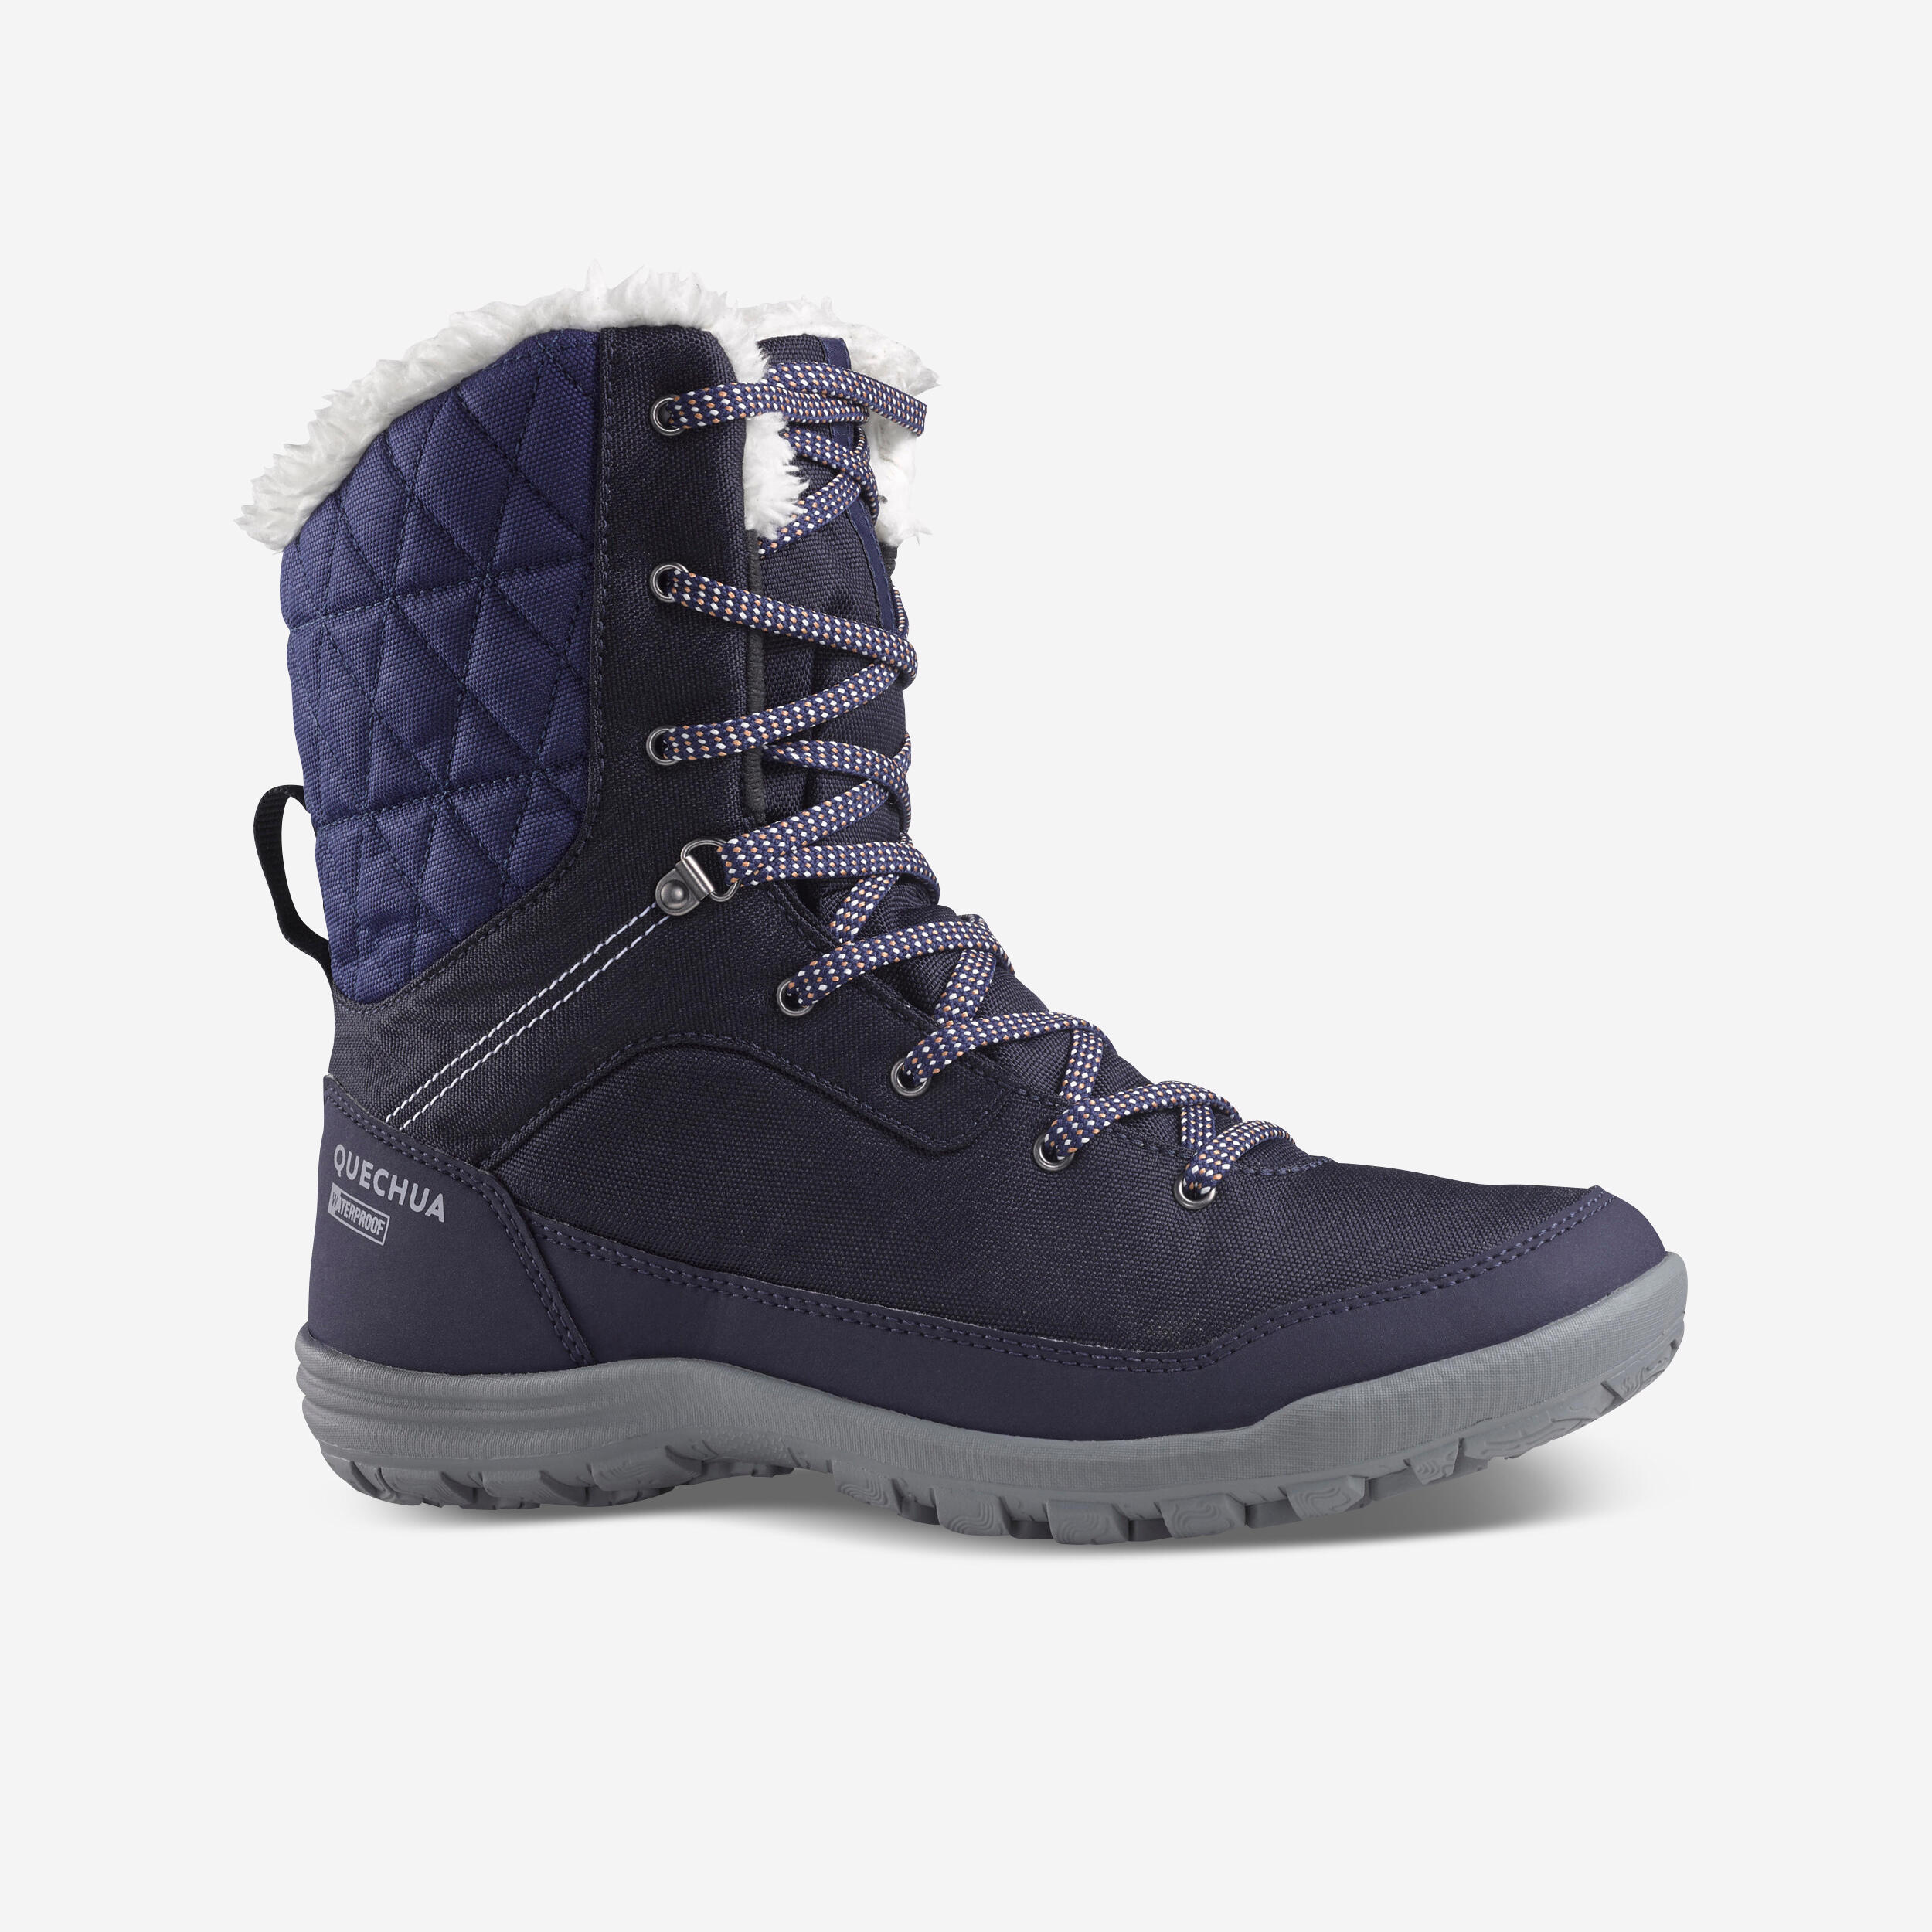 Women’s Waterproof Winter Boots - SH 100 Black - QUECHUA